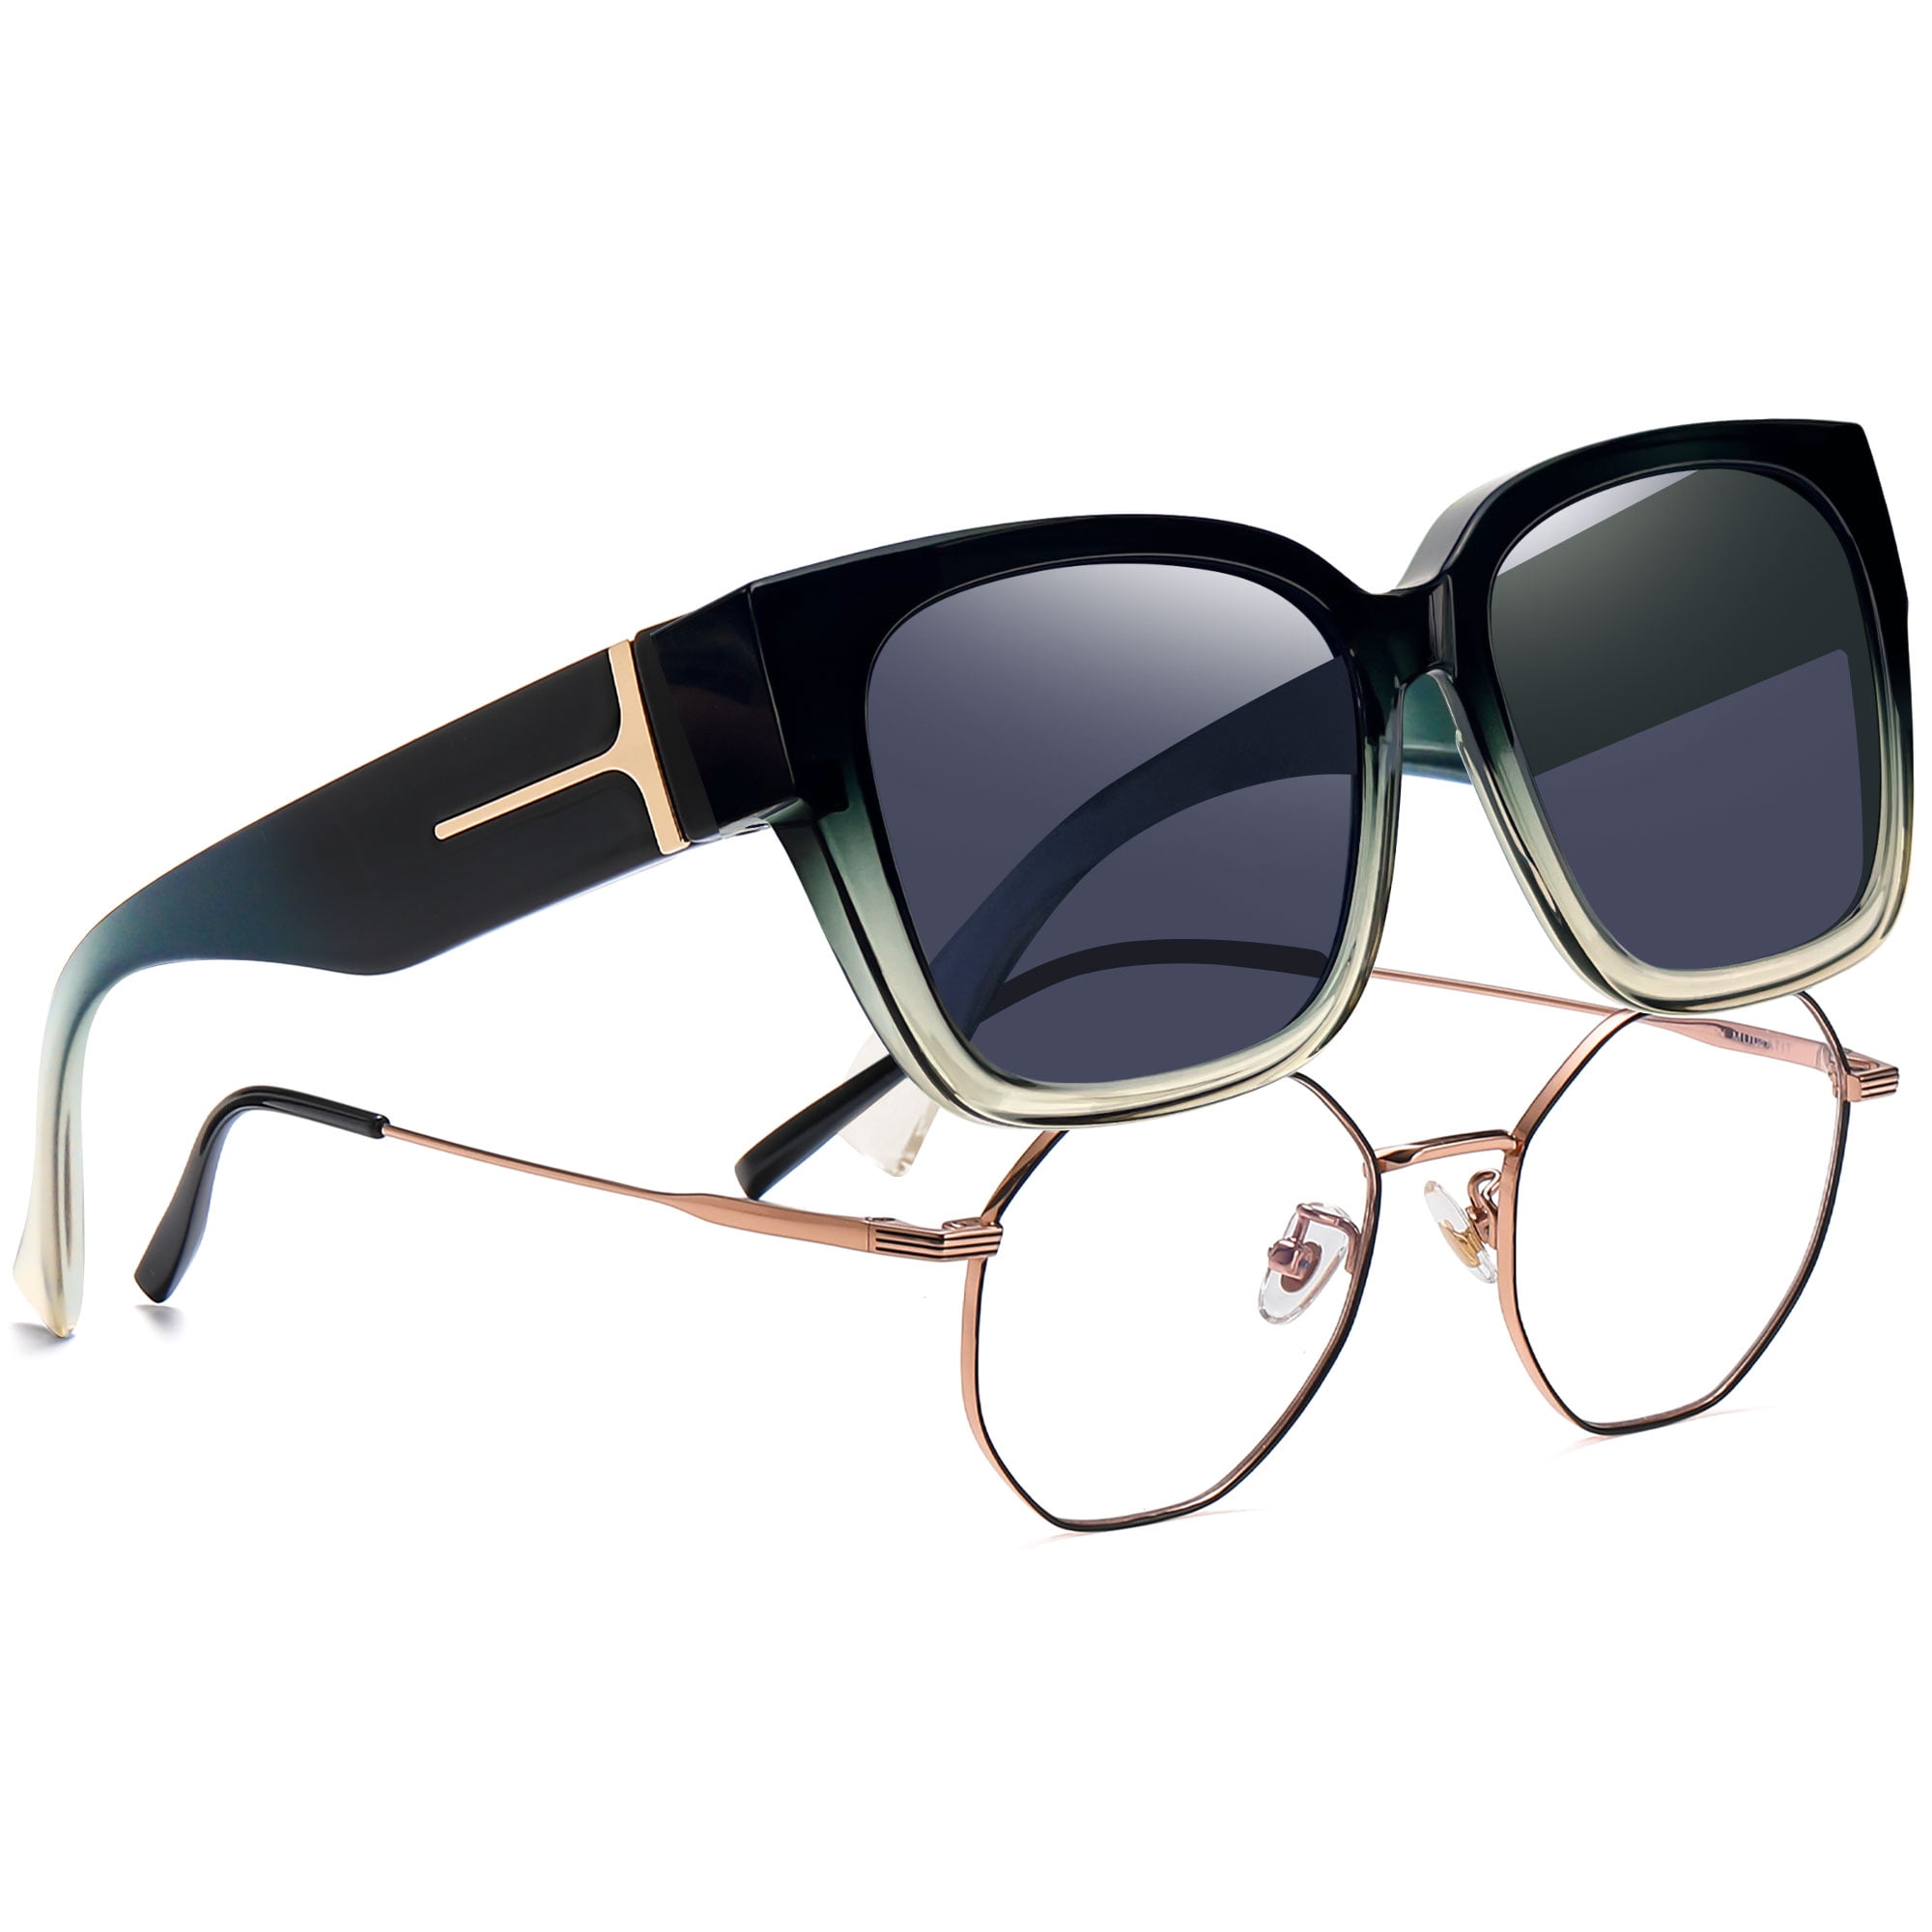 ZMNVEG Wrap Around Sports Sunglasses for Men Women Fashion Oval